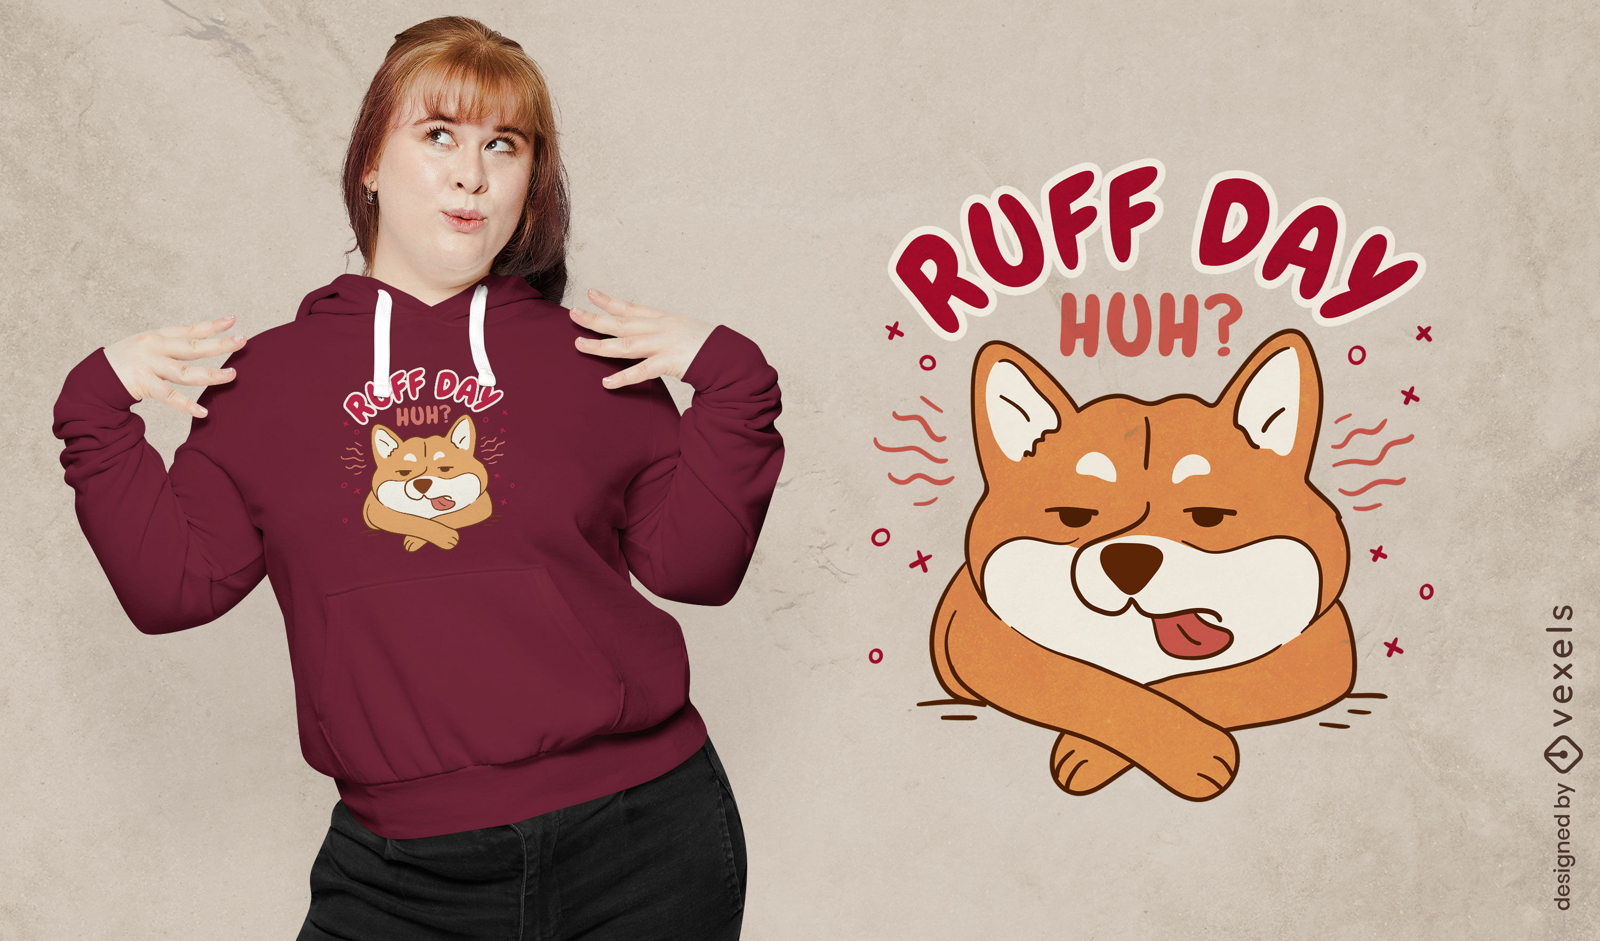 Ruff Day lustiger Hundet-shirt Entwurf